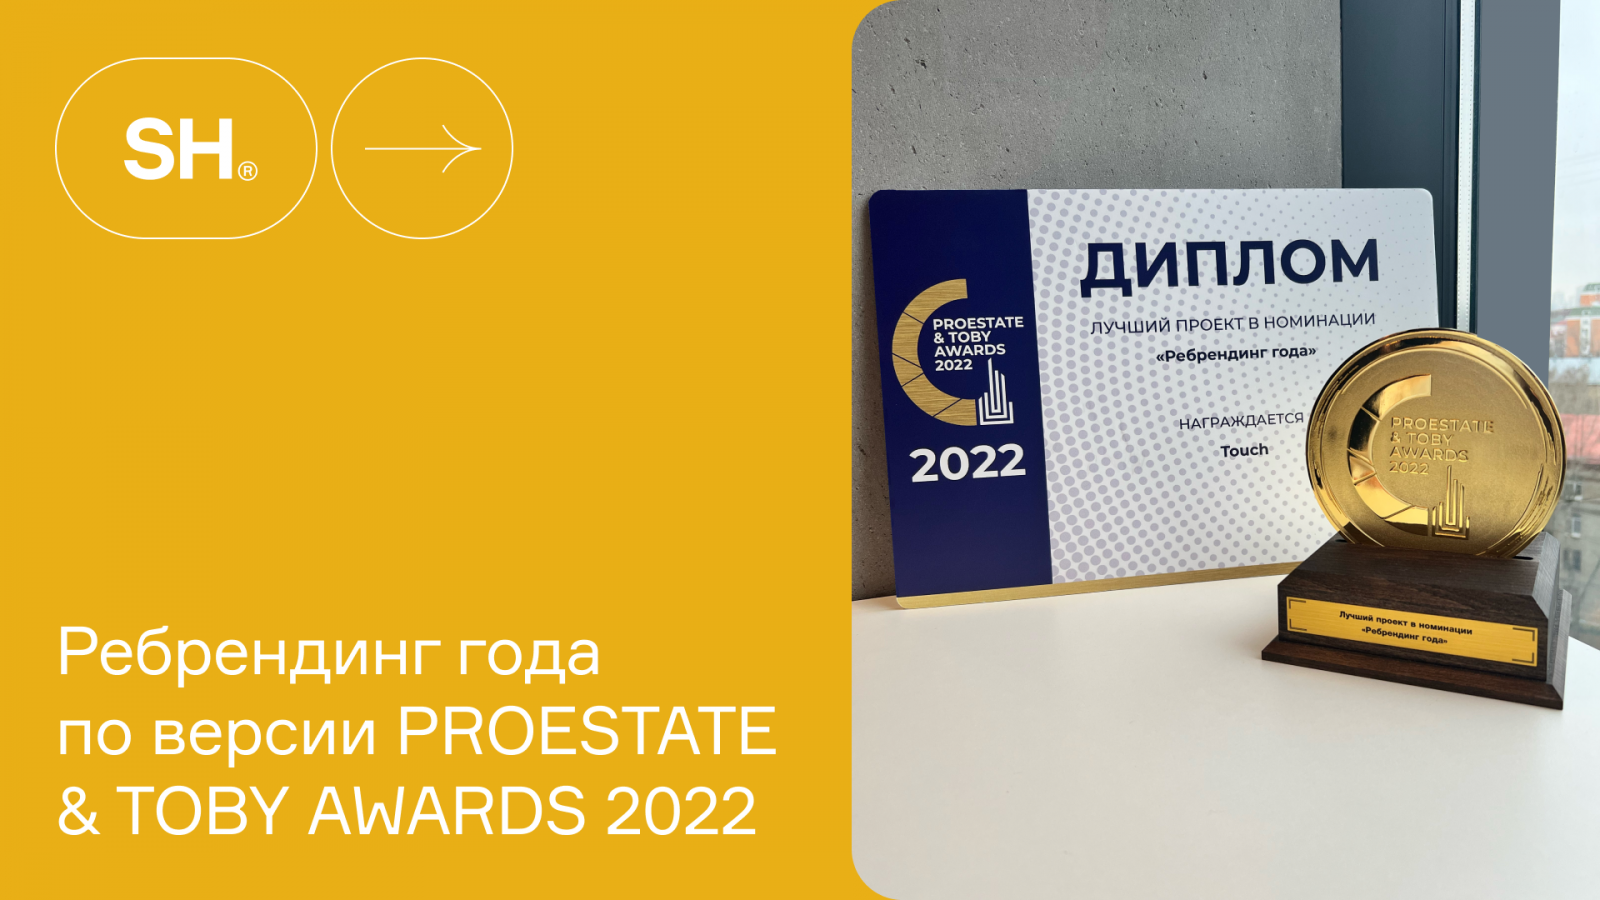 Touch победил в номинации ребрендинг года премии Proestate&Toby Awards 2022